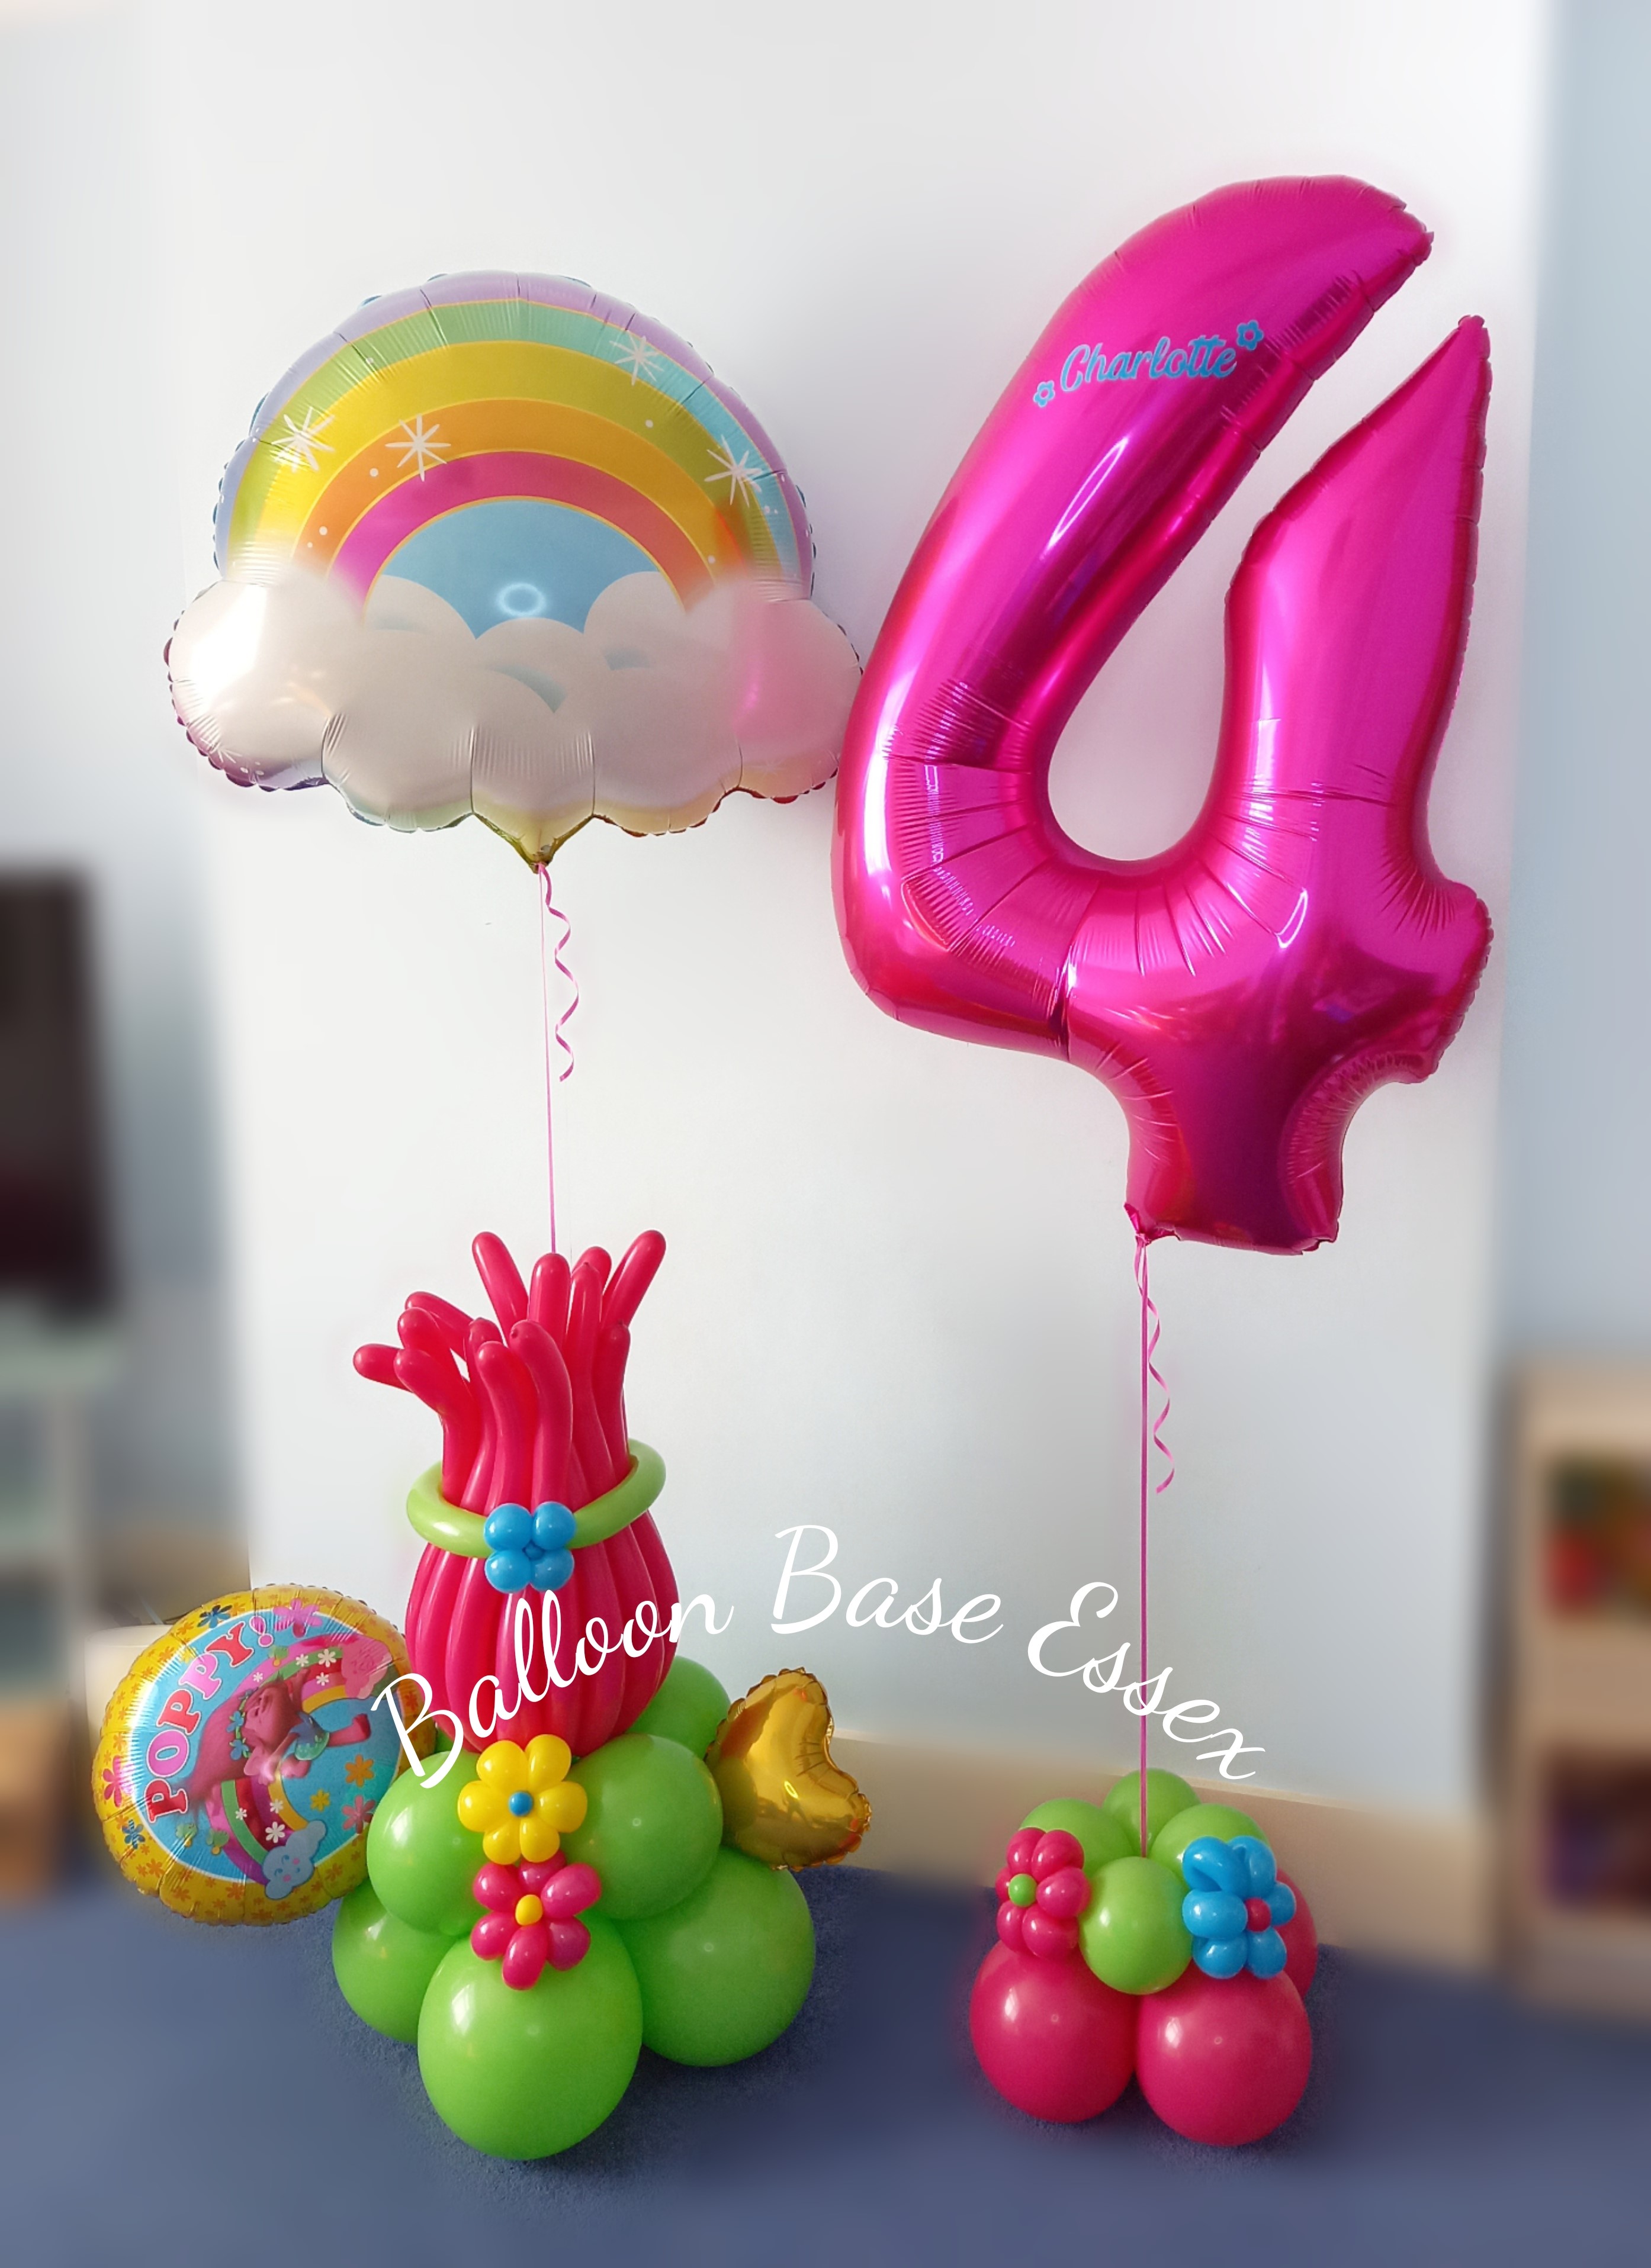 Poppy from Trolls themed birthday balloons